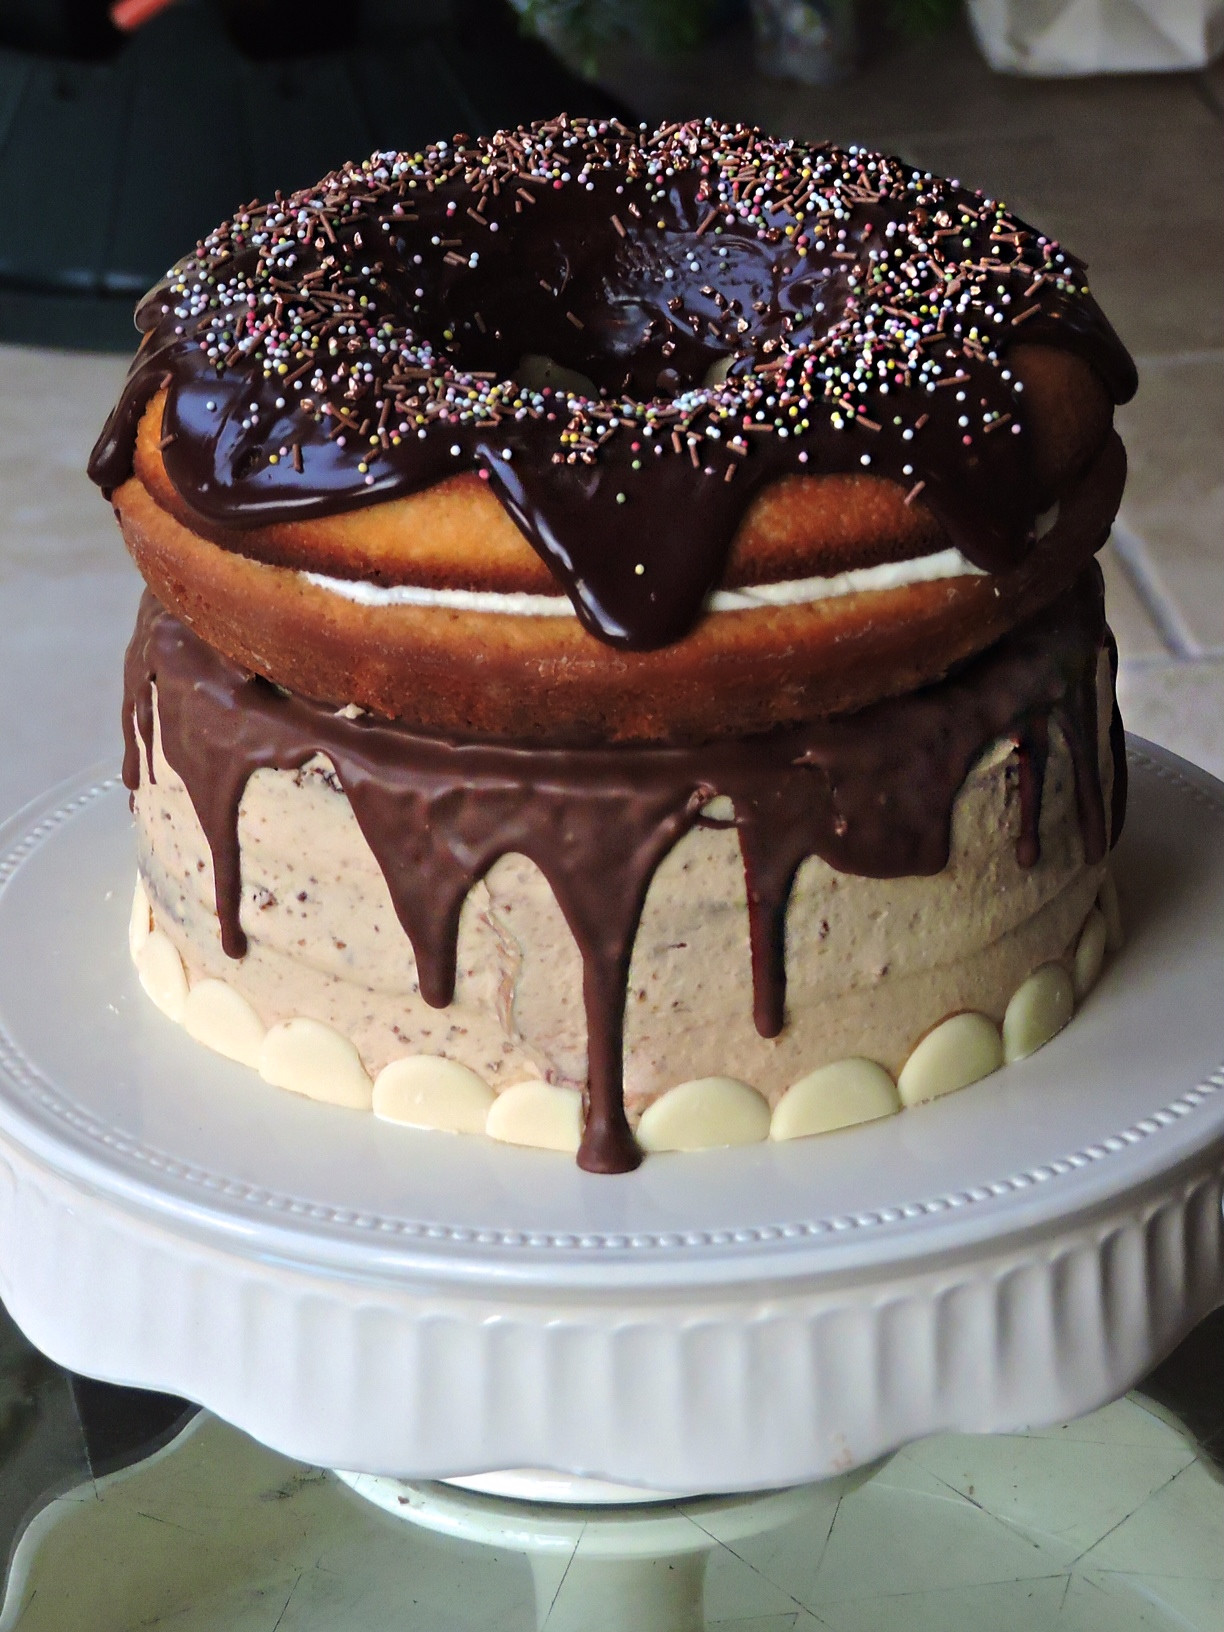 Best ideas about Giant Birthday Cake
. Save or Pin Giant Doughnut Birthday Cake – BakedByH Now.